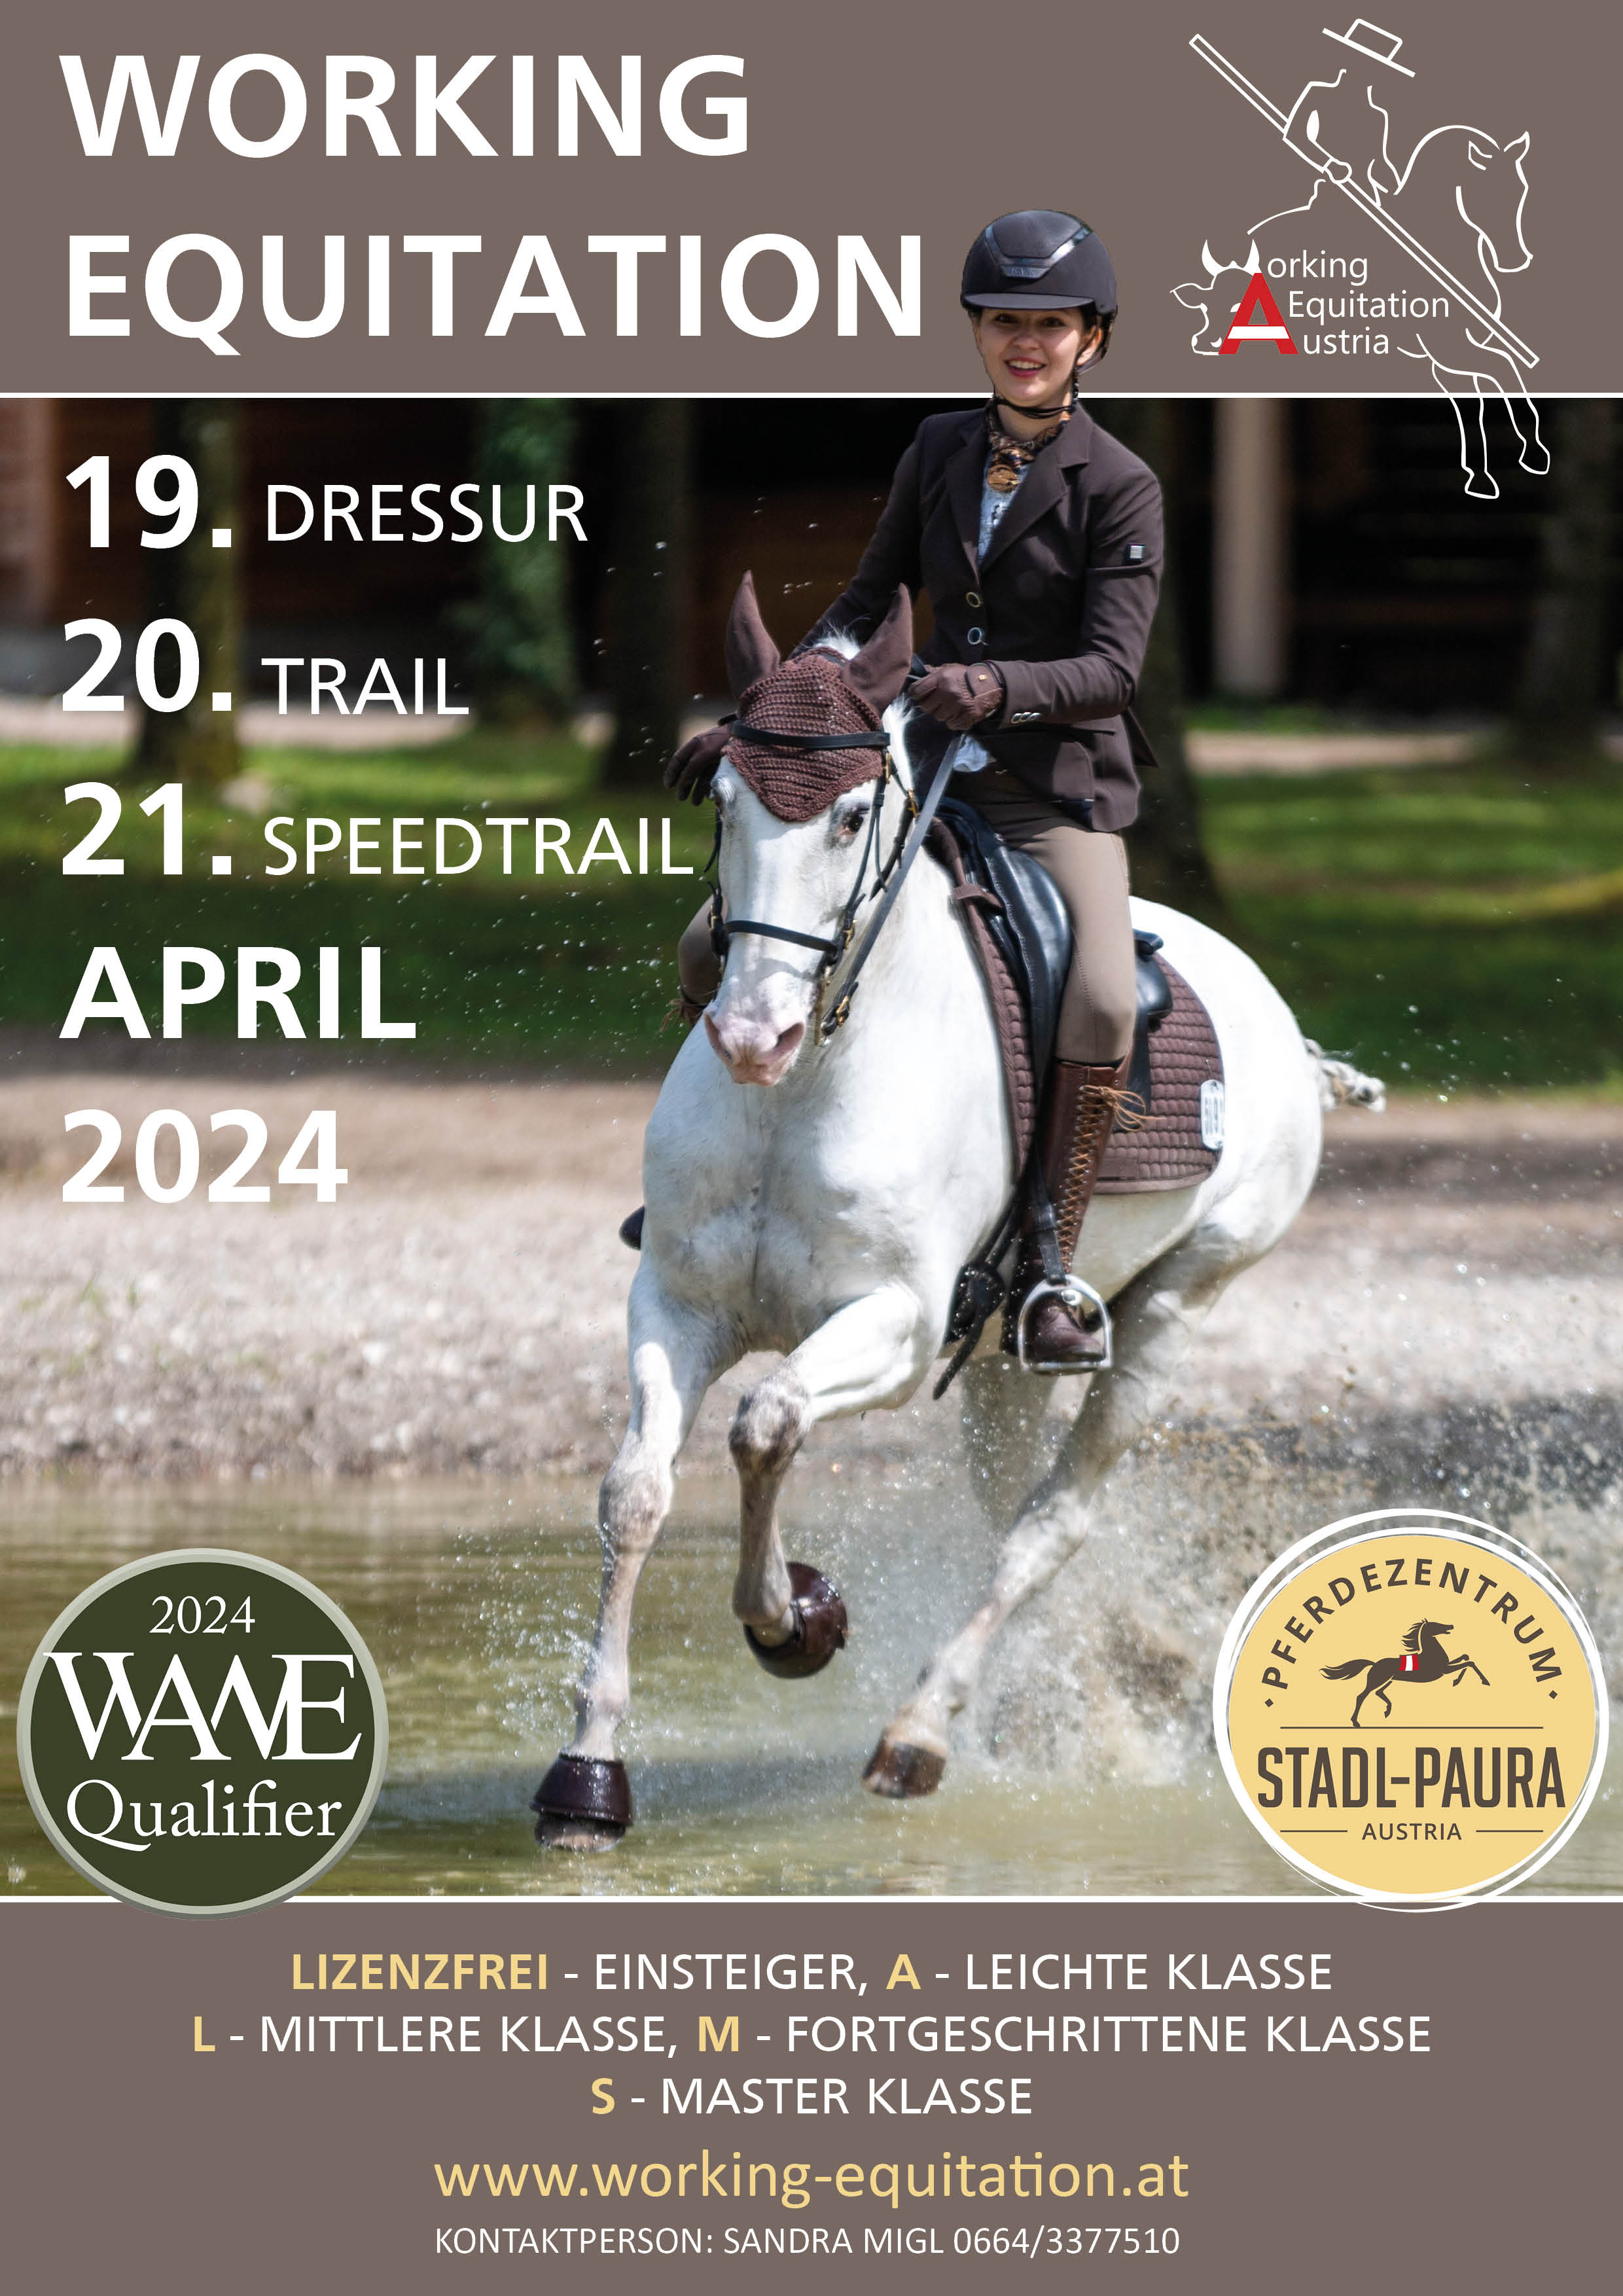 WAWE Qualifier, Stadl Paura, Austria